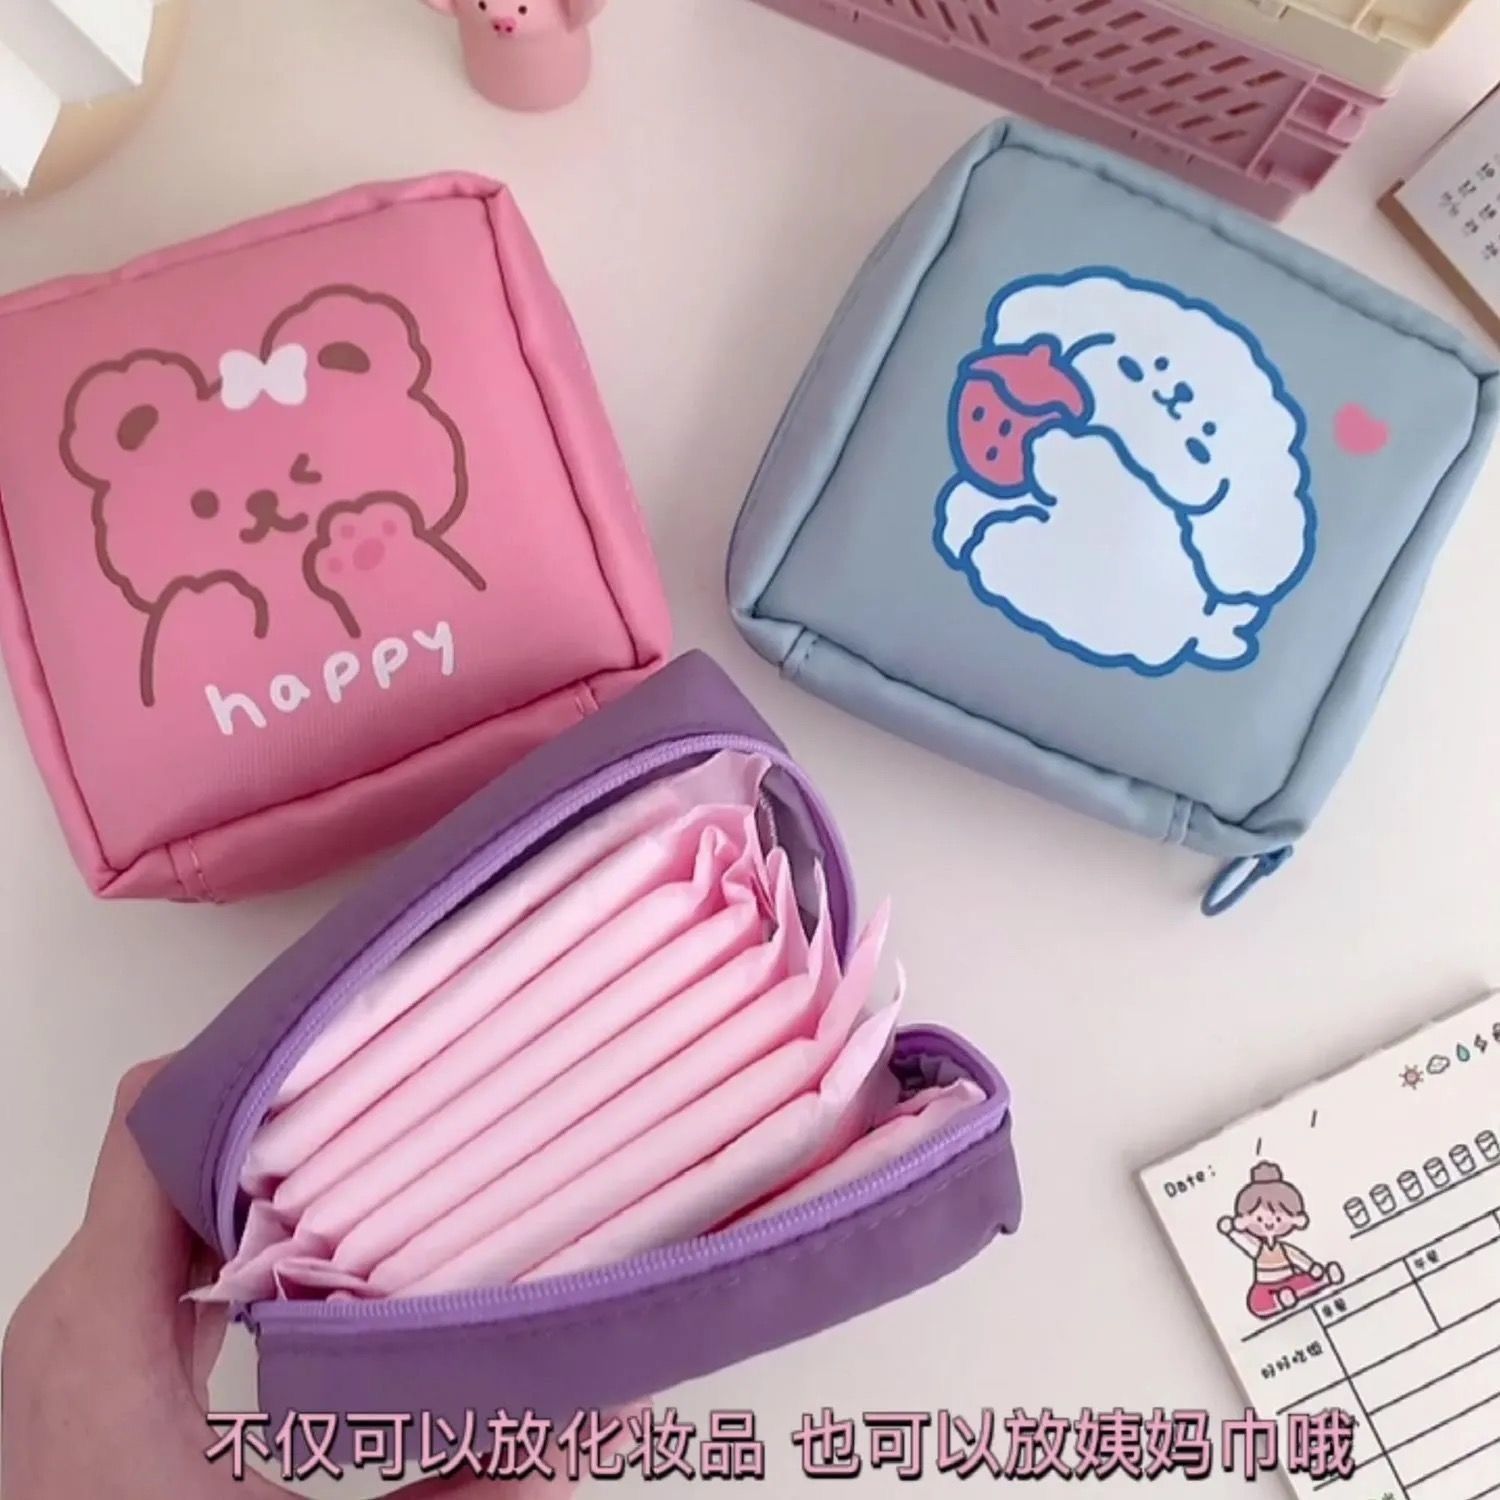 Aunt towel storage bag ins portable small bag small bag Japanese students menstrual sanitary napkin menstrual affairs